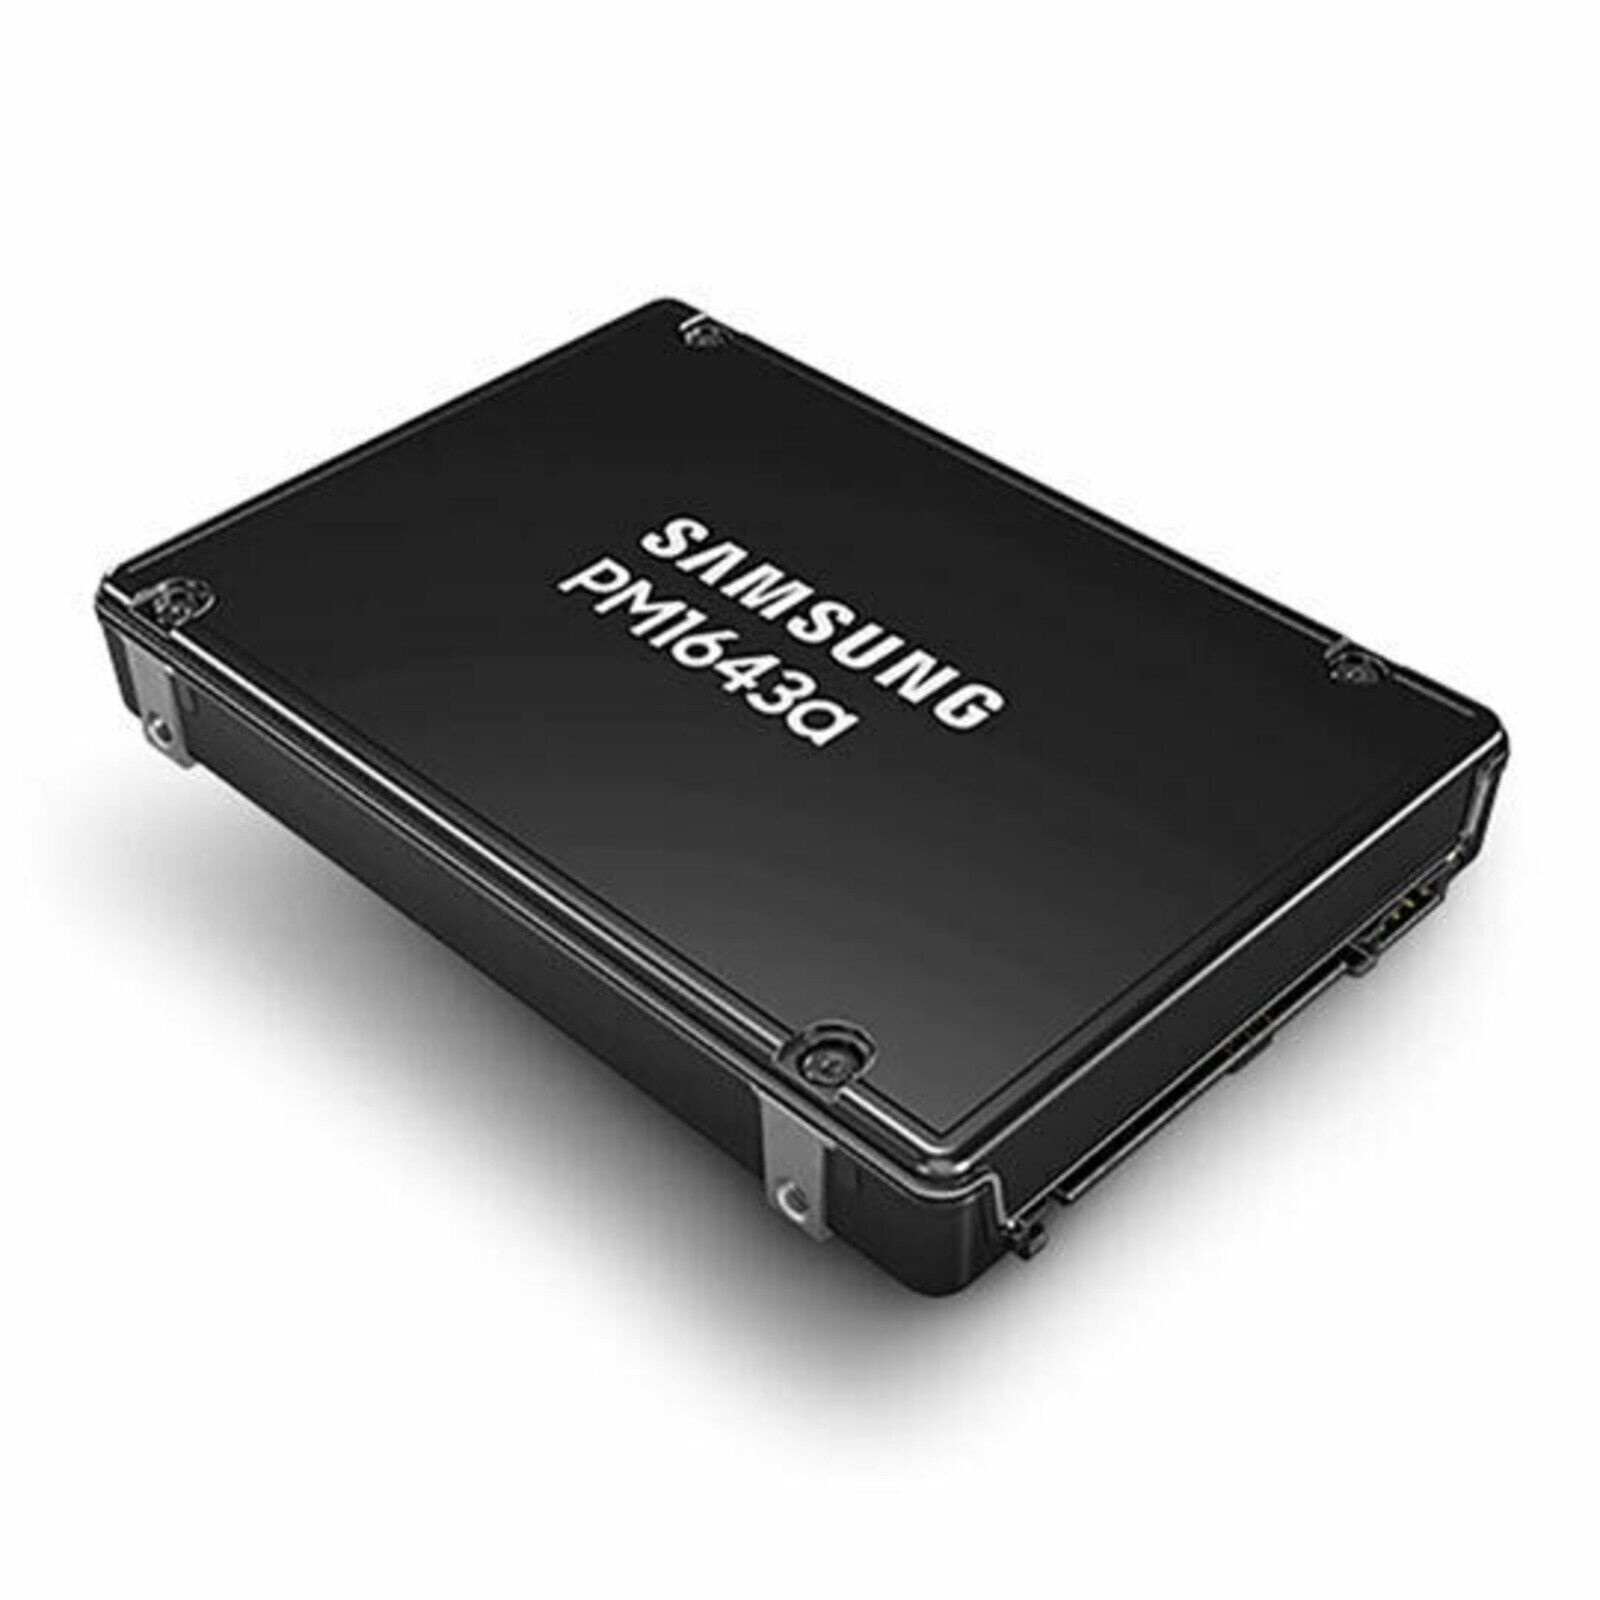 Samsung PM1643a MZILT960HBHQ-00007 960GB SAS 12Gb/s 2.5